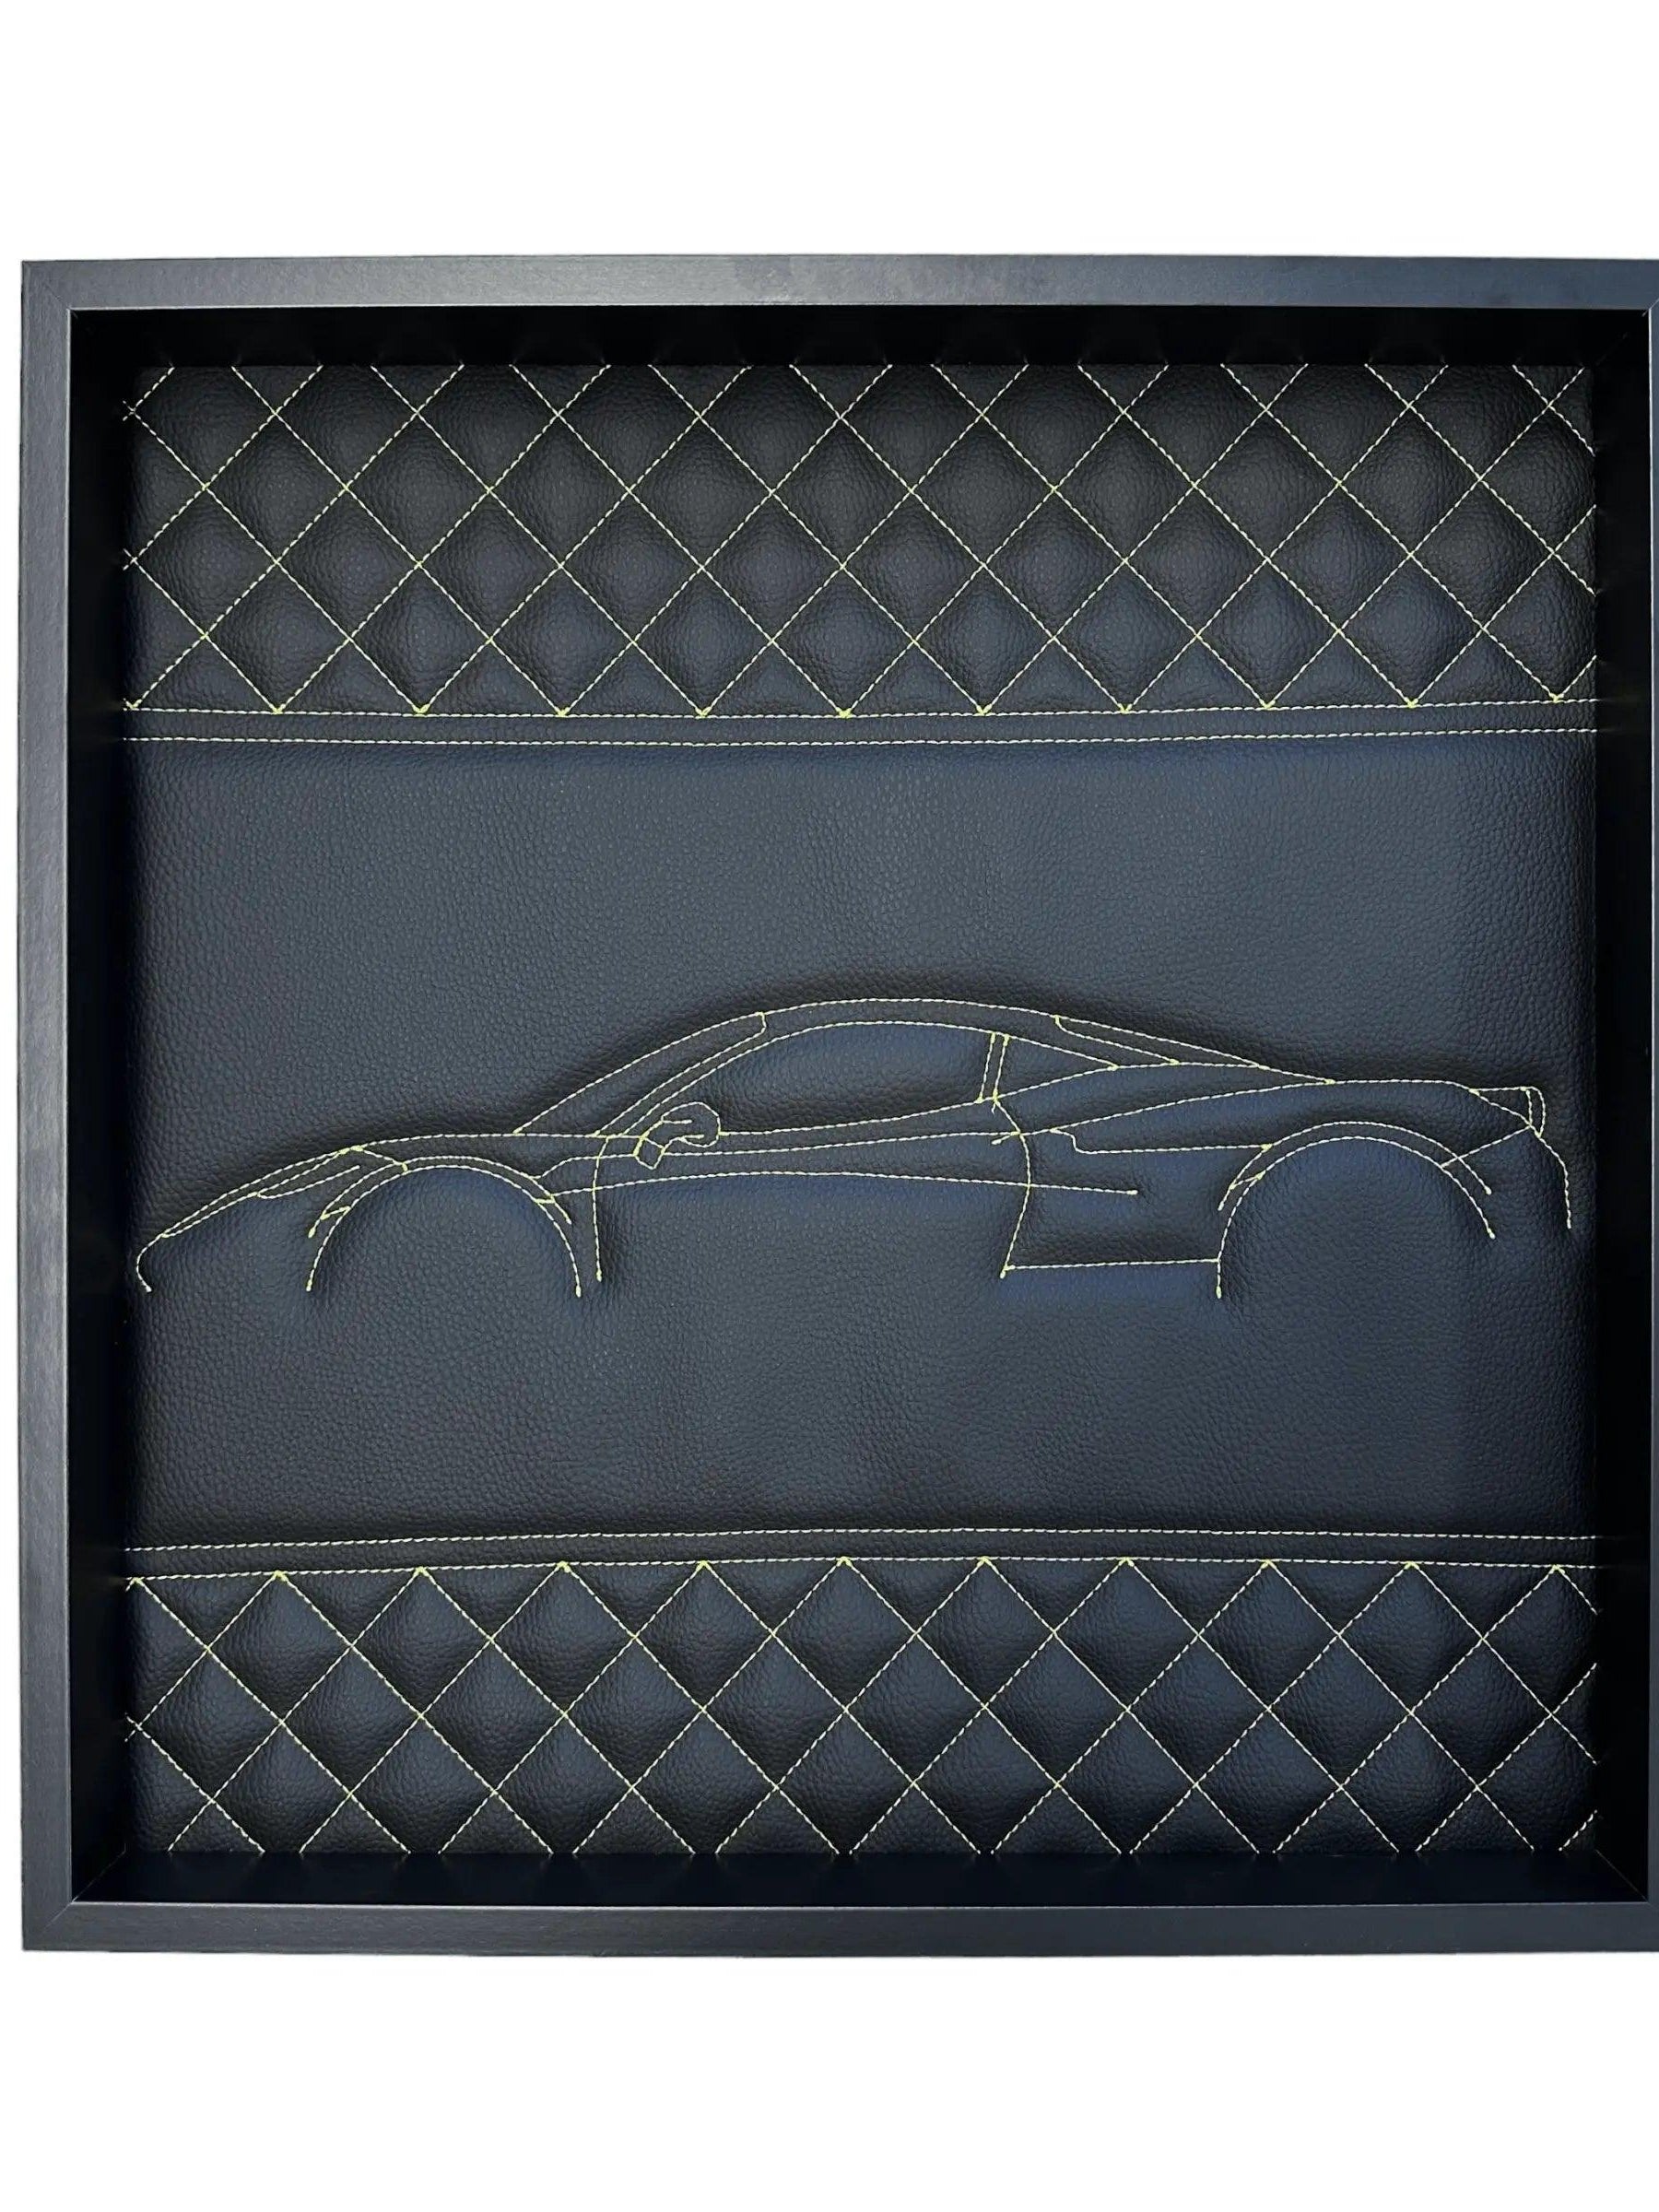 Black Leather Ferrari 488 Inspired Wall Art: Embroidered Yellow Stitch Luxury Decor